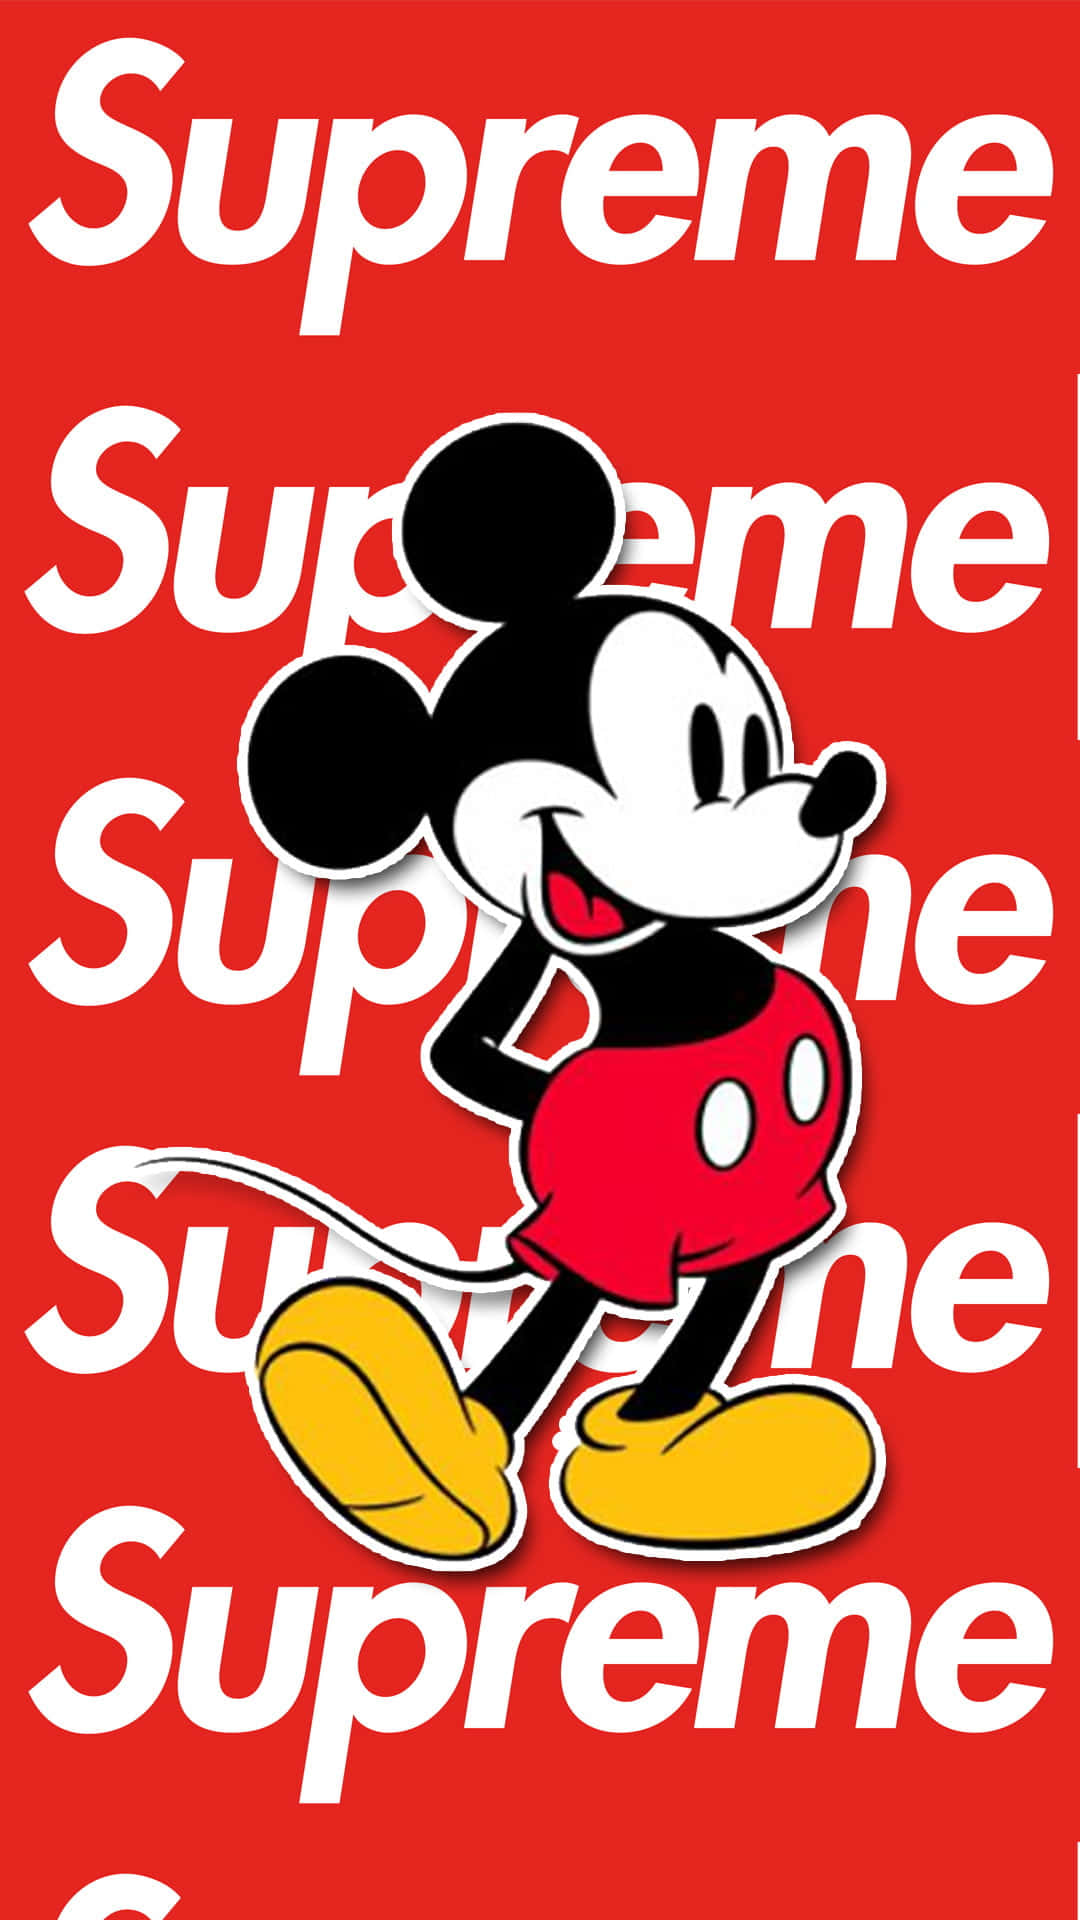 Download Cartoon Supreme Clothing Dab Michael Jordan Jersey